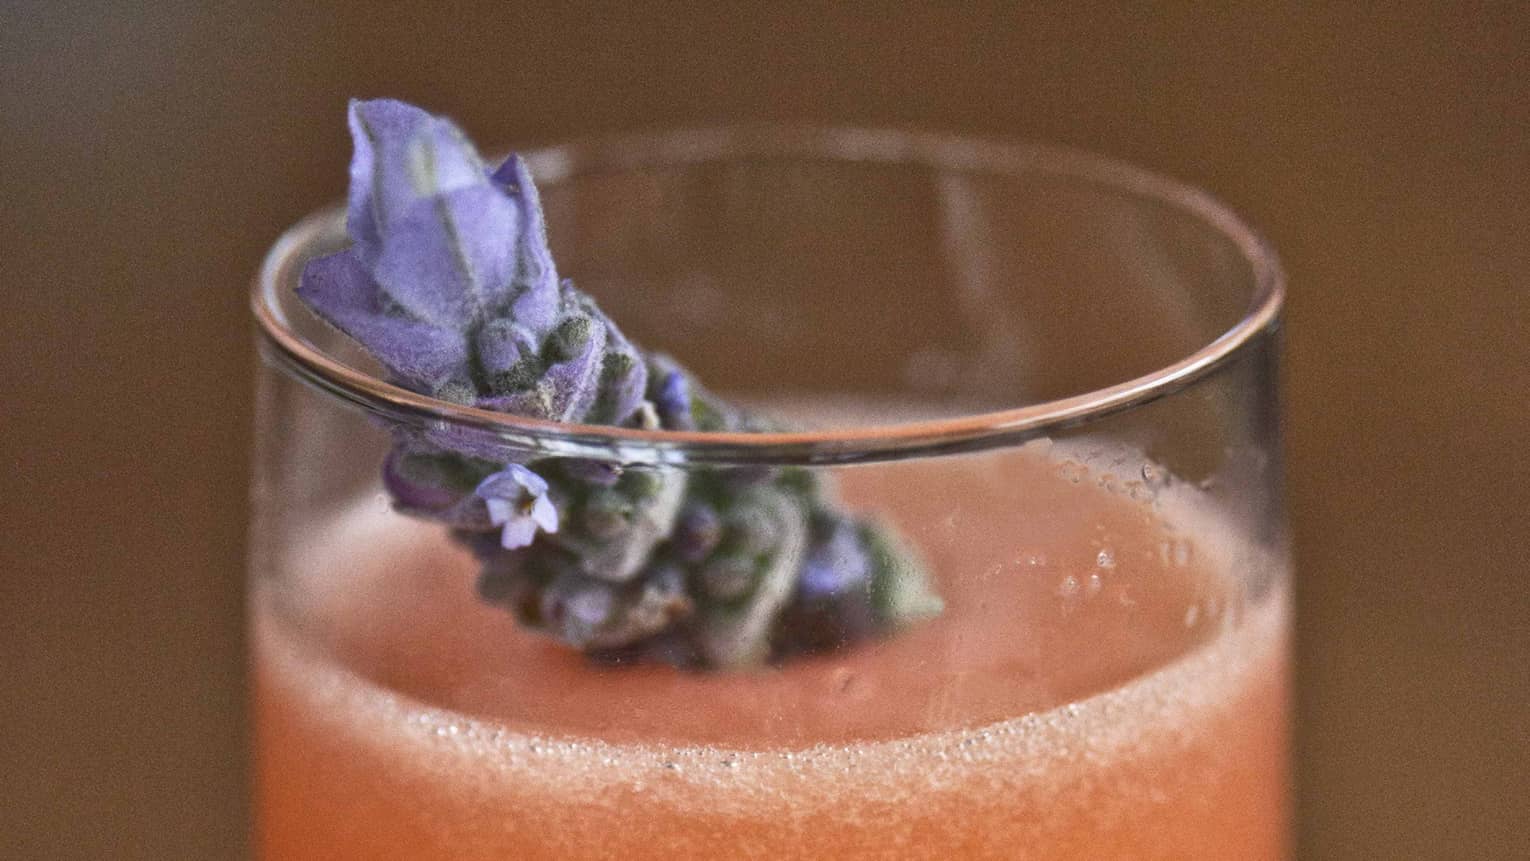 Tall glass with orange cocktail, lavendar garnish